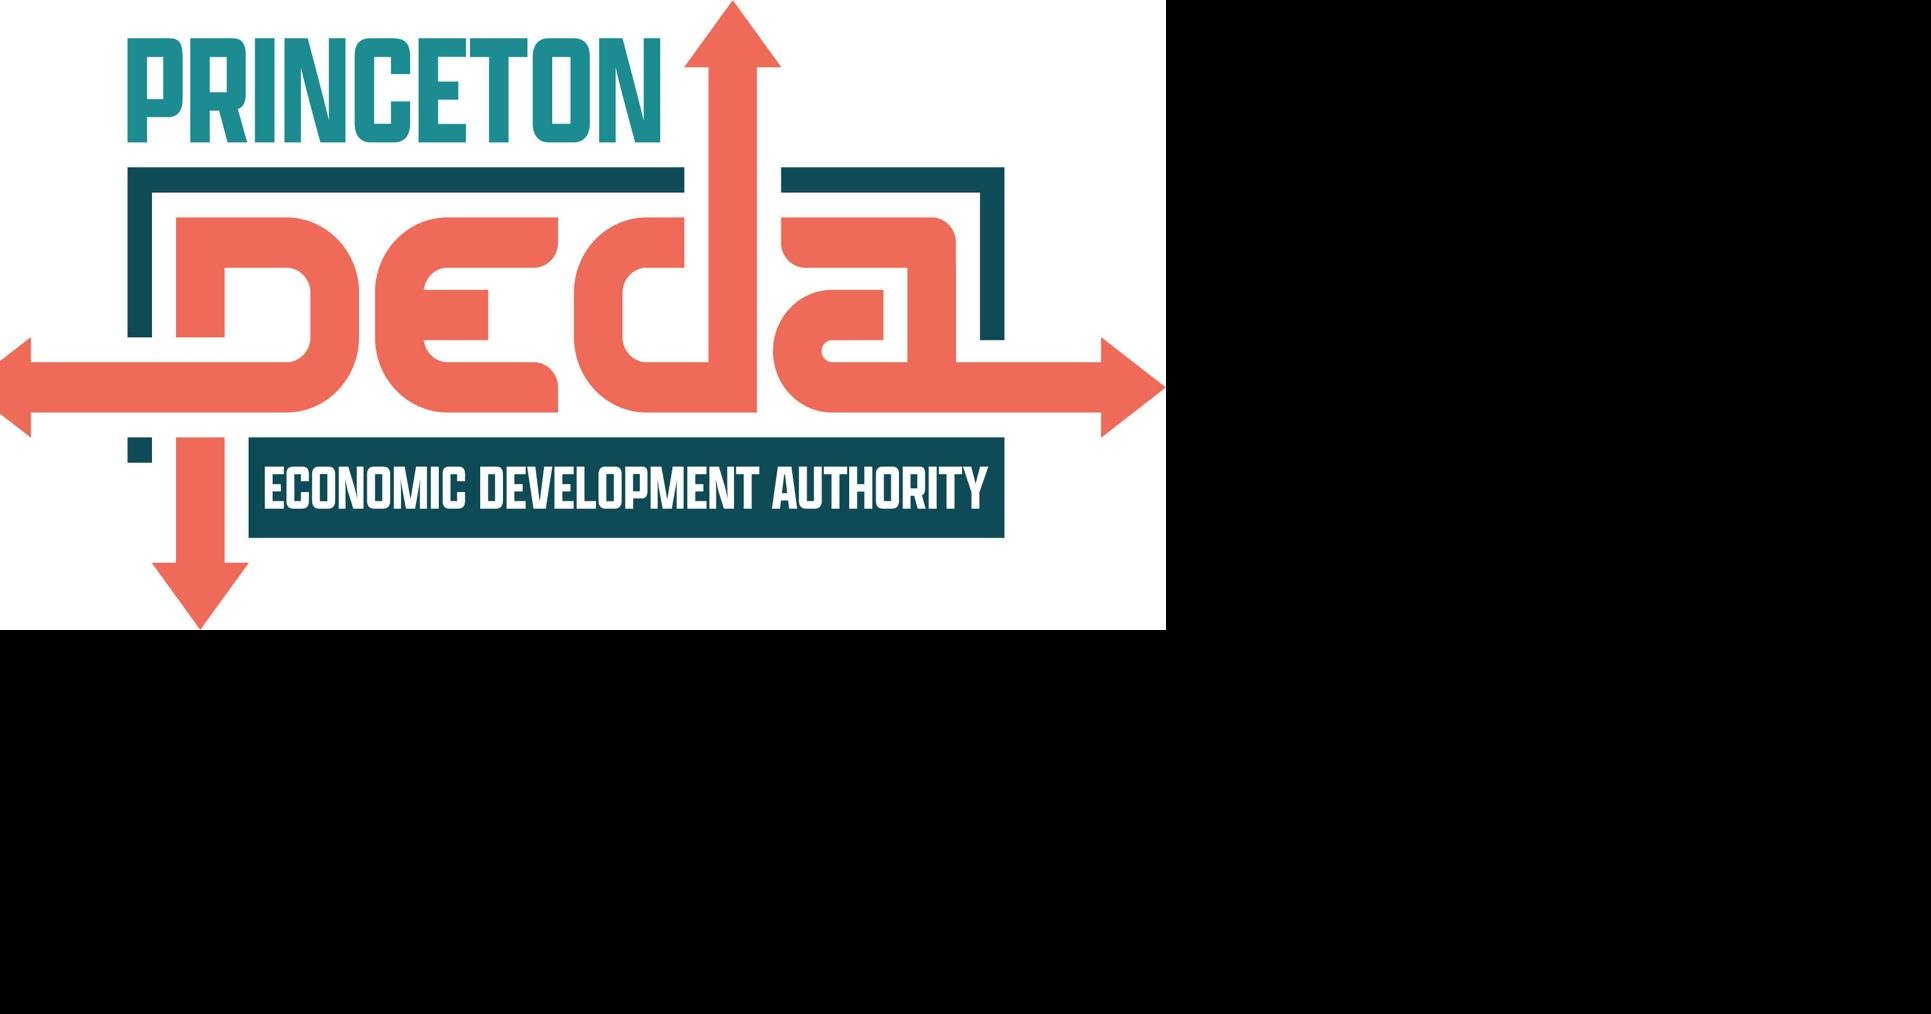 national economic and development authority logo